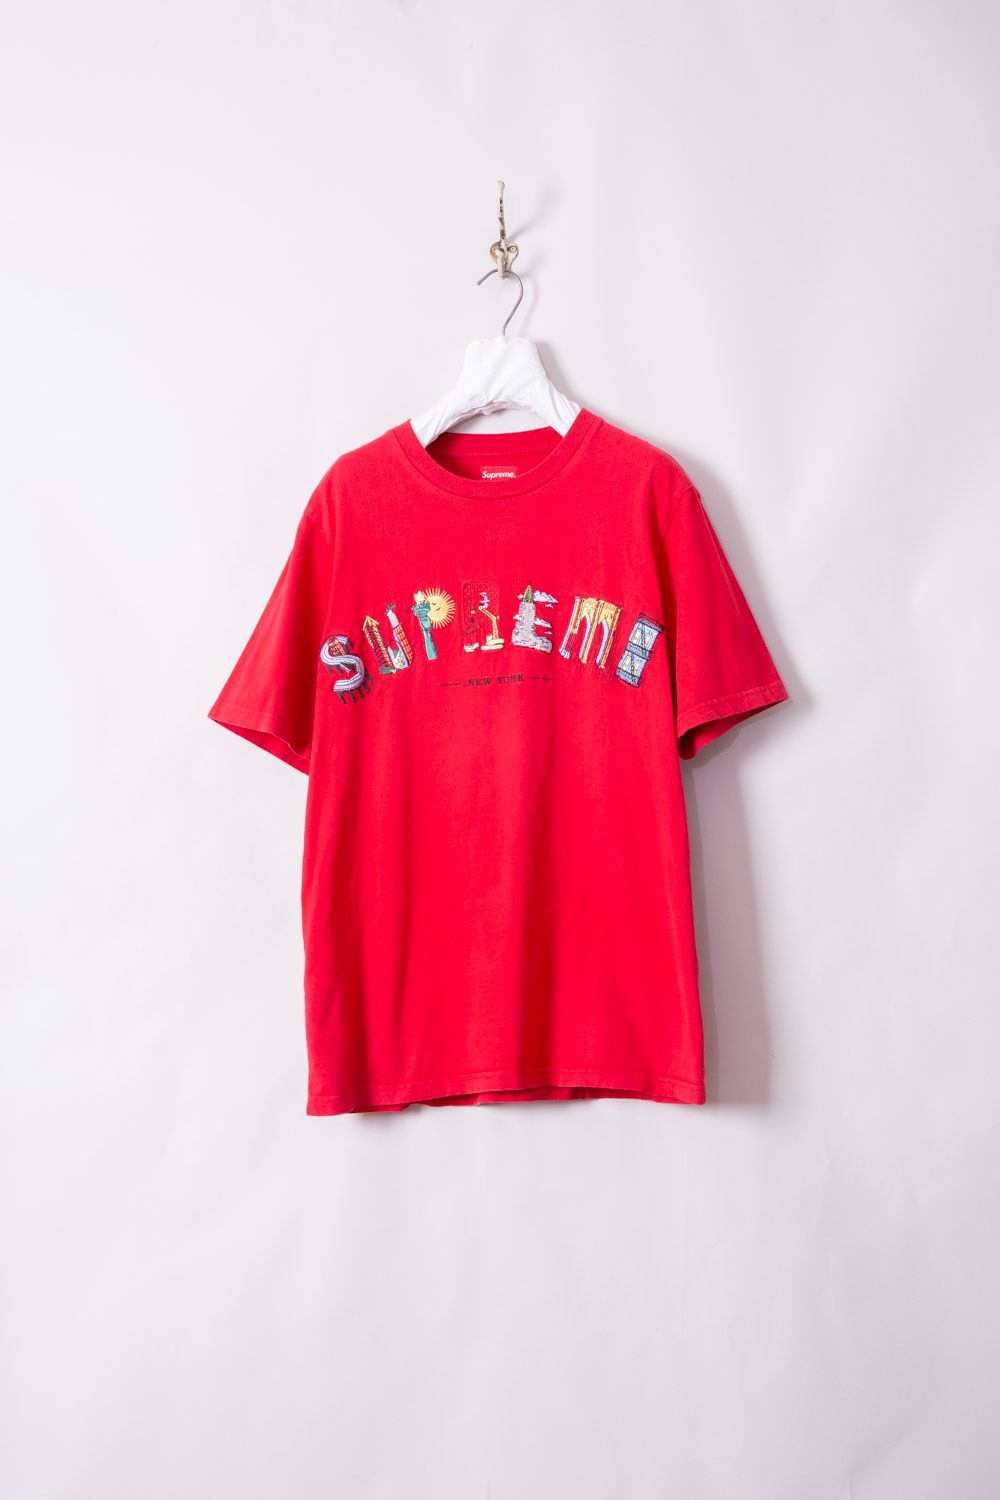 Supreme シュプリーム City Arc Tee Tシャツ 刺繍アーチロゴ - メルカリ